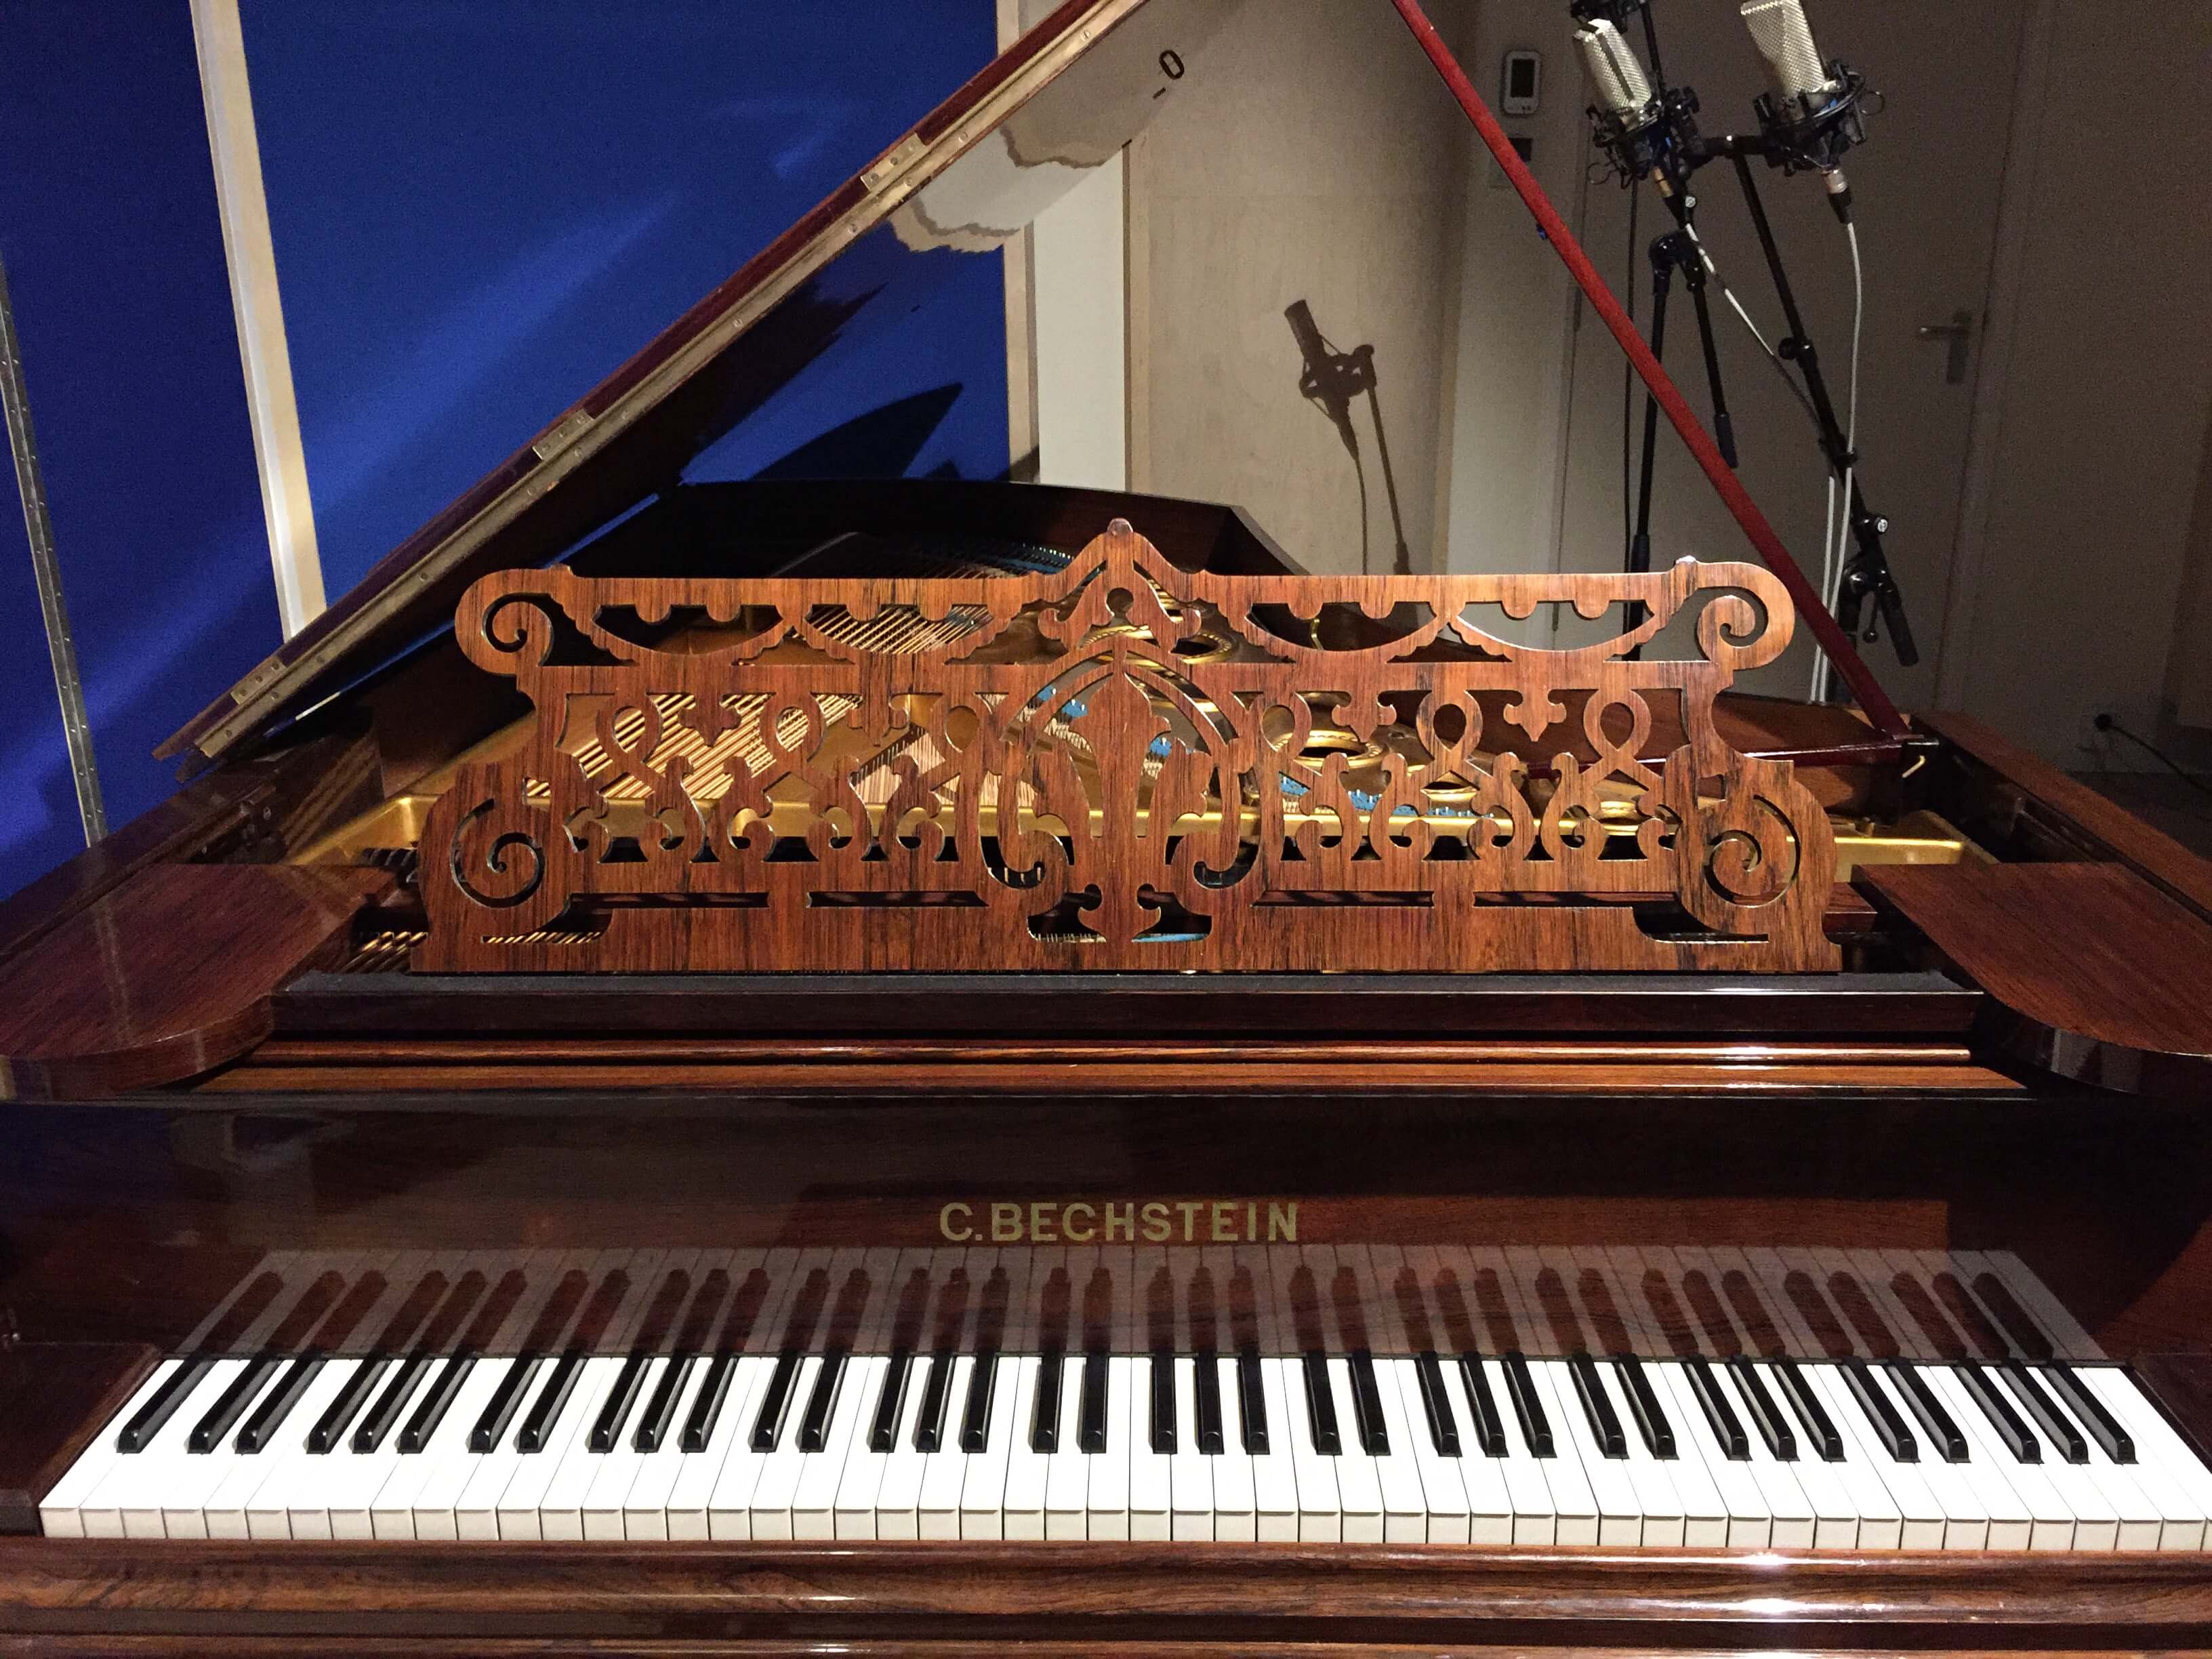 Bechstein grand piano